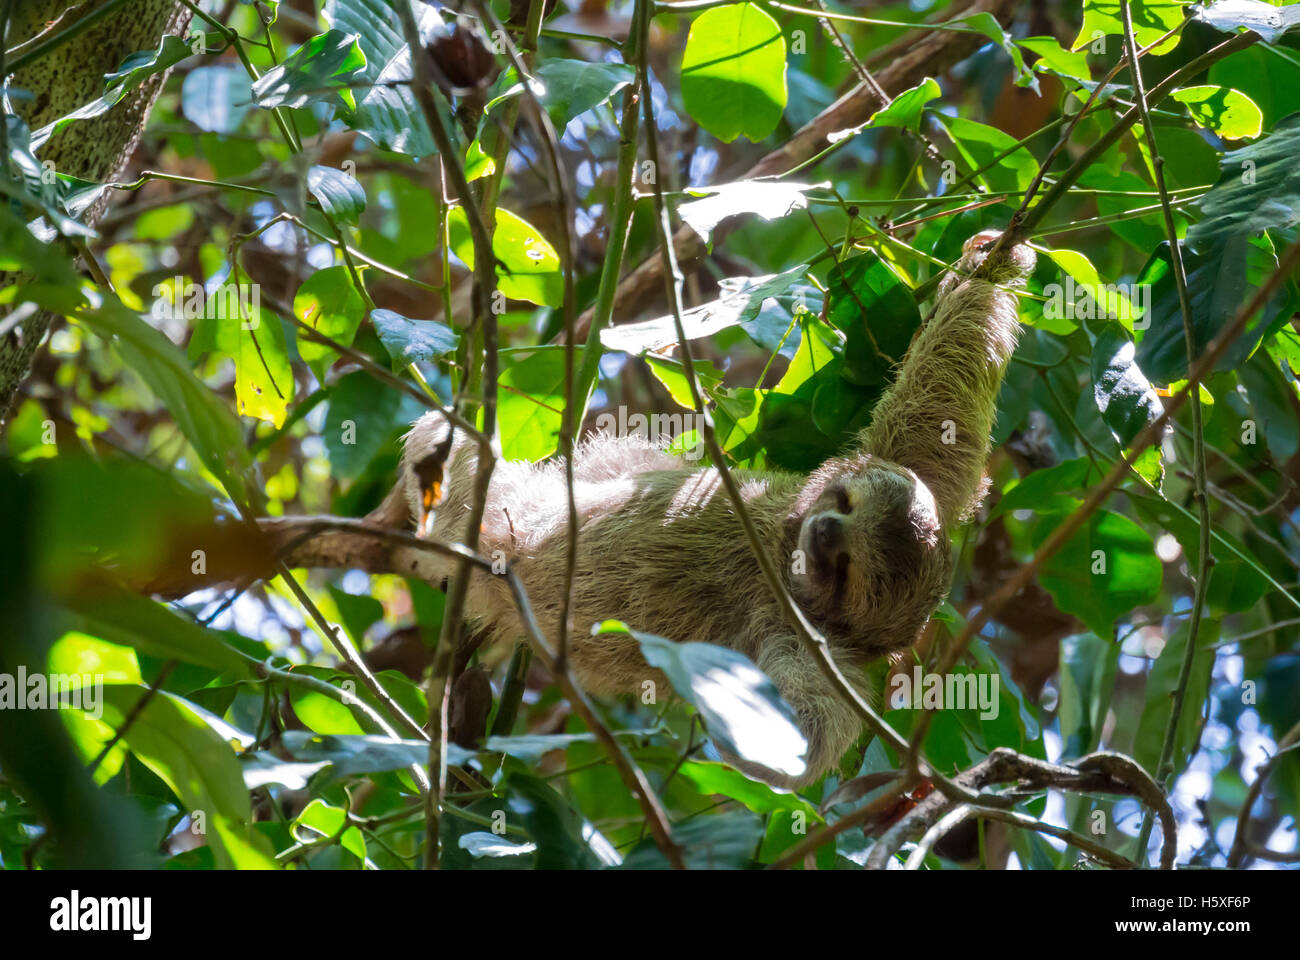 Dreifingerfaultier Manuel Antonio Nationalpark Costa Rica Mittelamerika Stockfoto